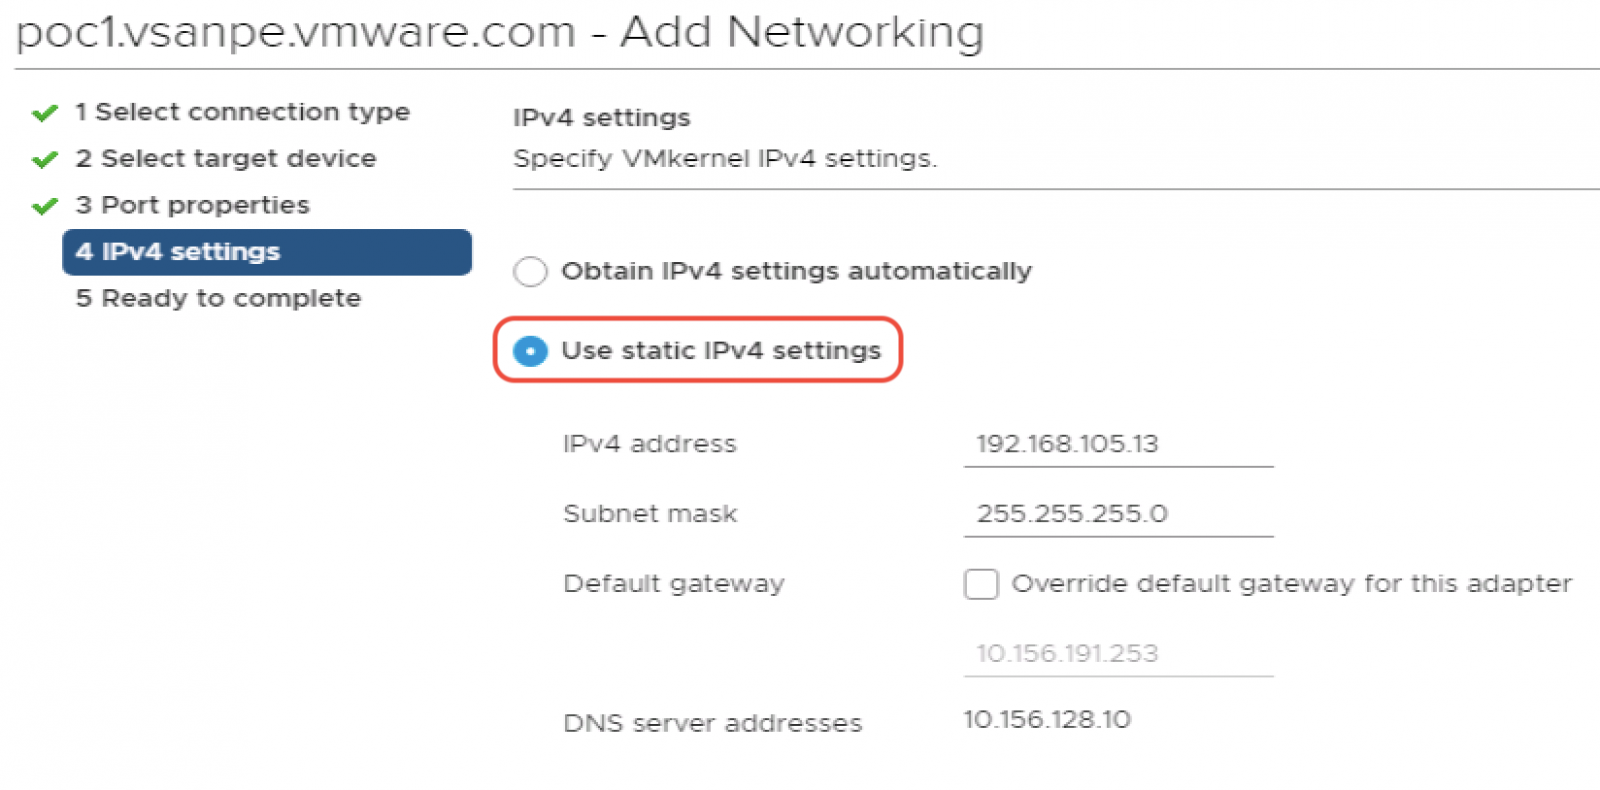 Obtain IPv4 settings automatically